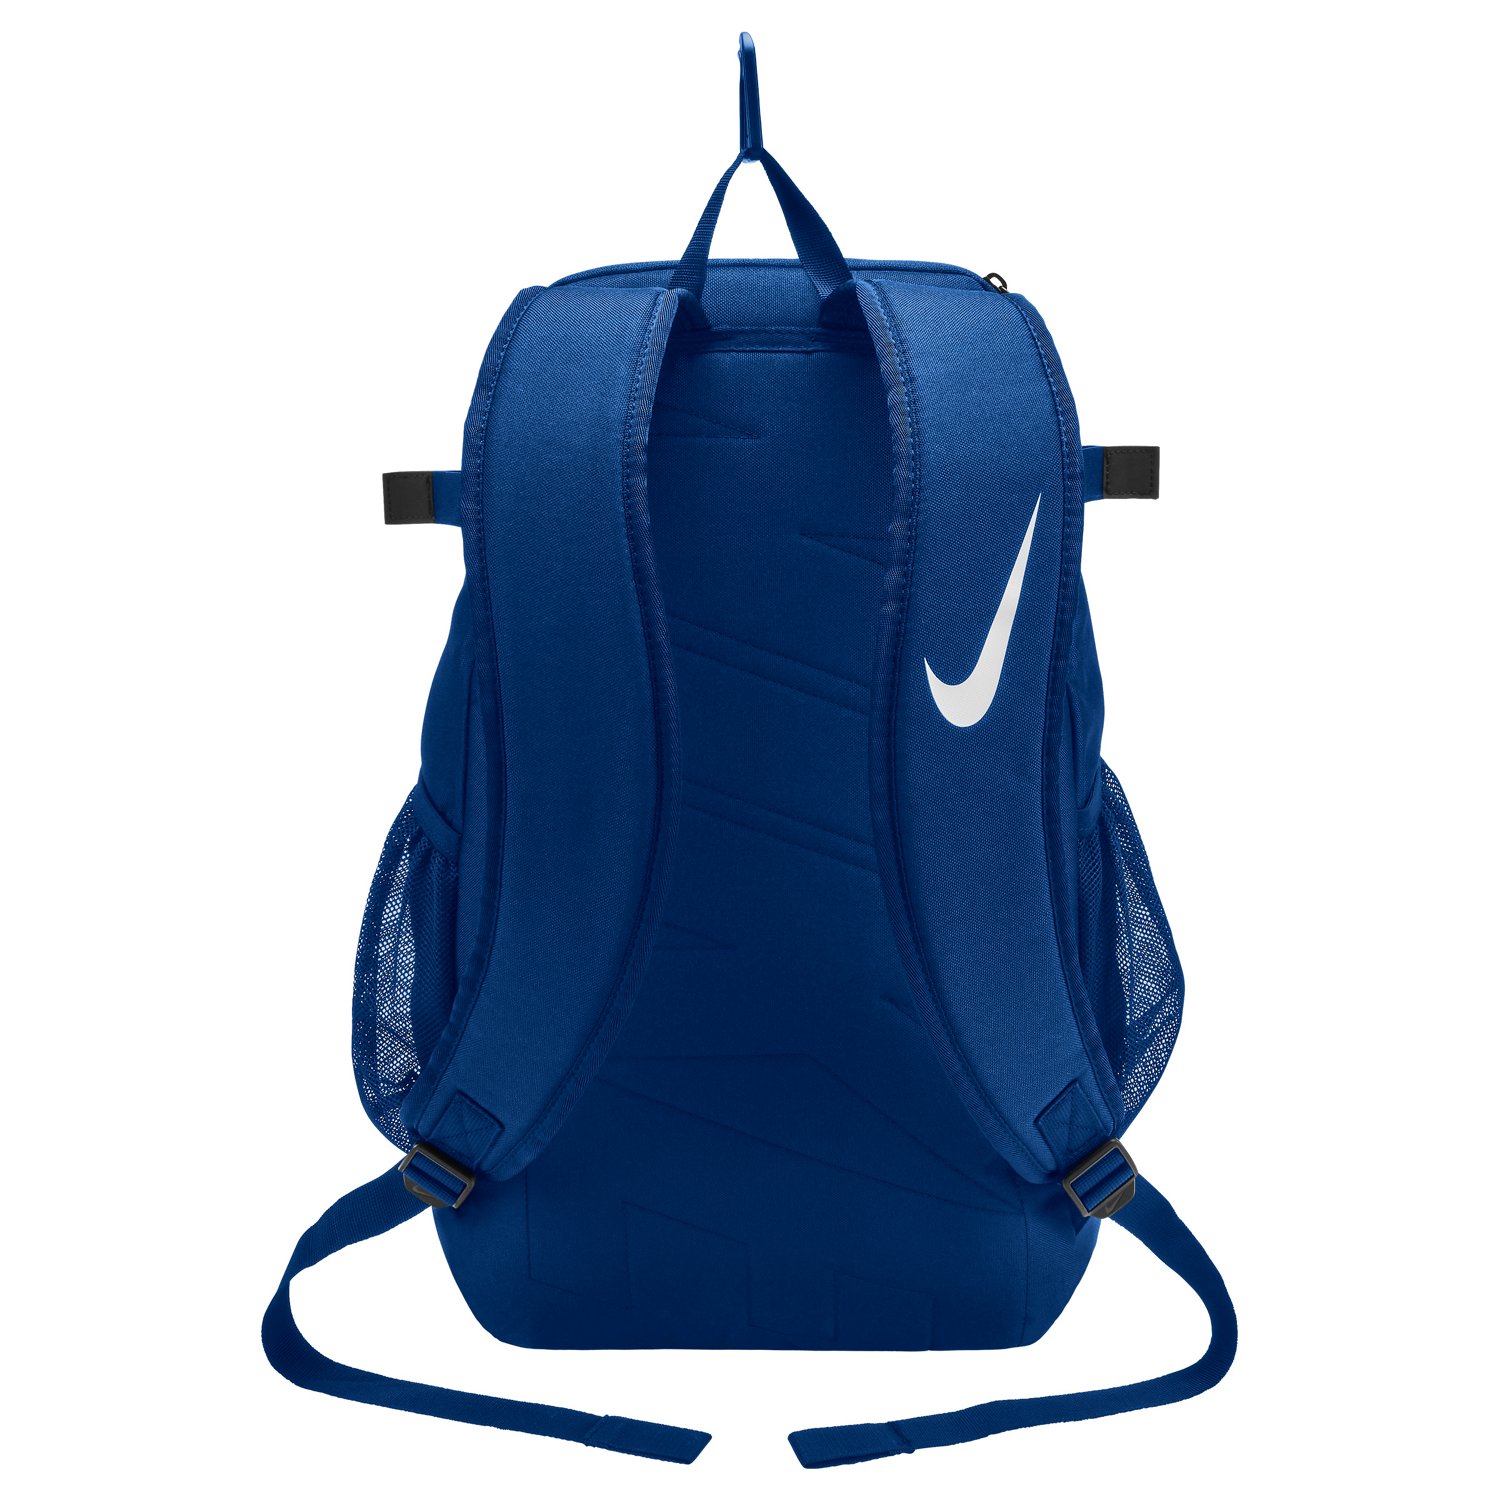 Ontwaken zelf Verbergen Nike Vapor Select Baseball Backpack | Academy